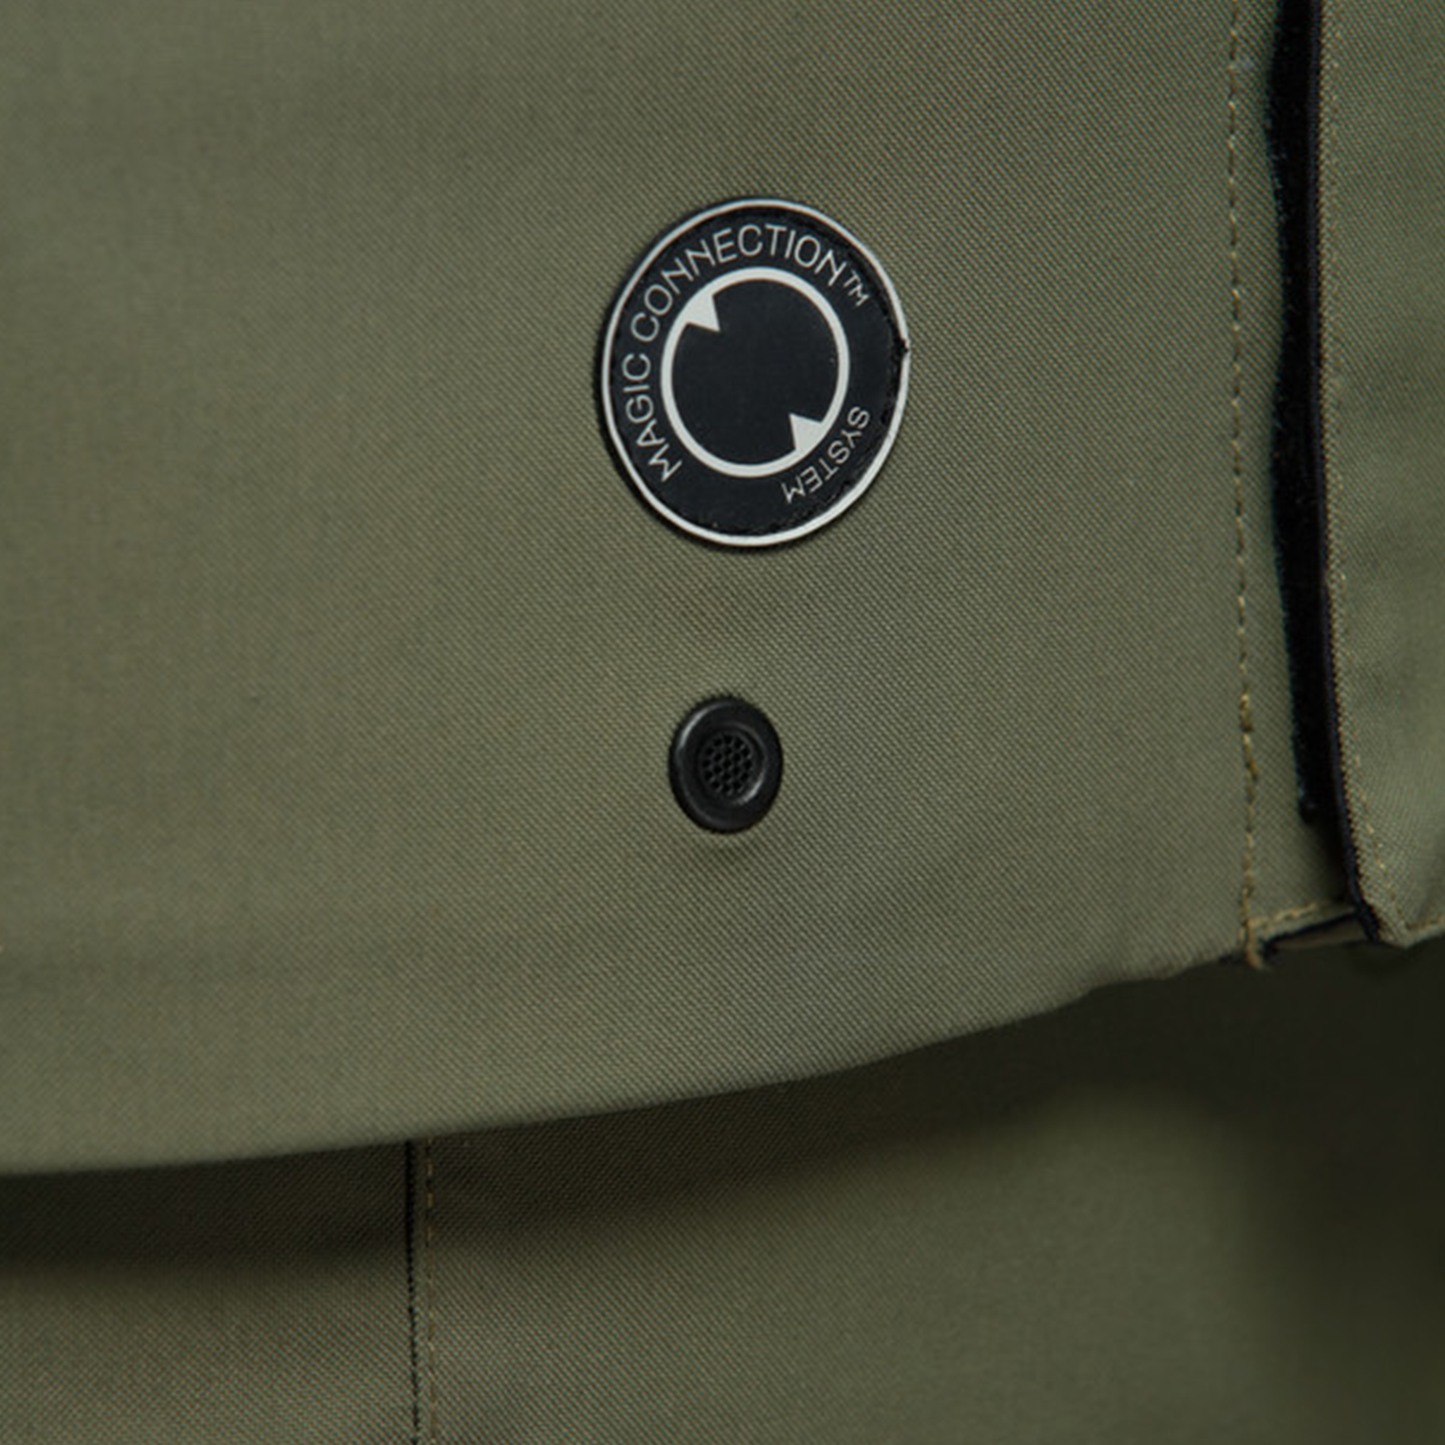 Dainese Hekla Absoluteshell Pro 20K Jacket - Army Green-Black (63H)